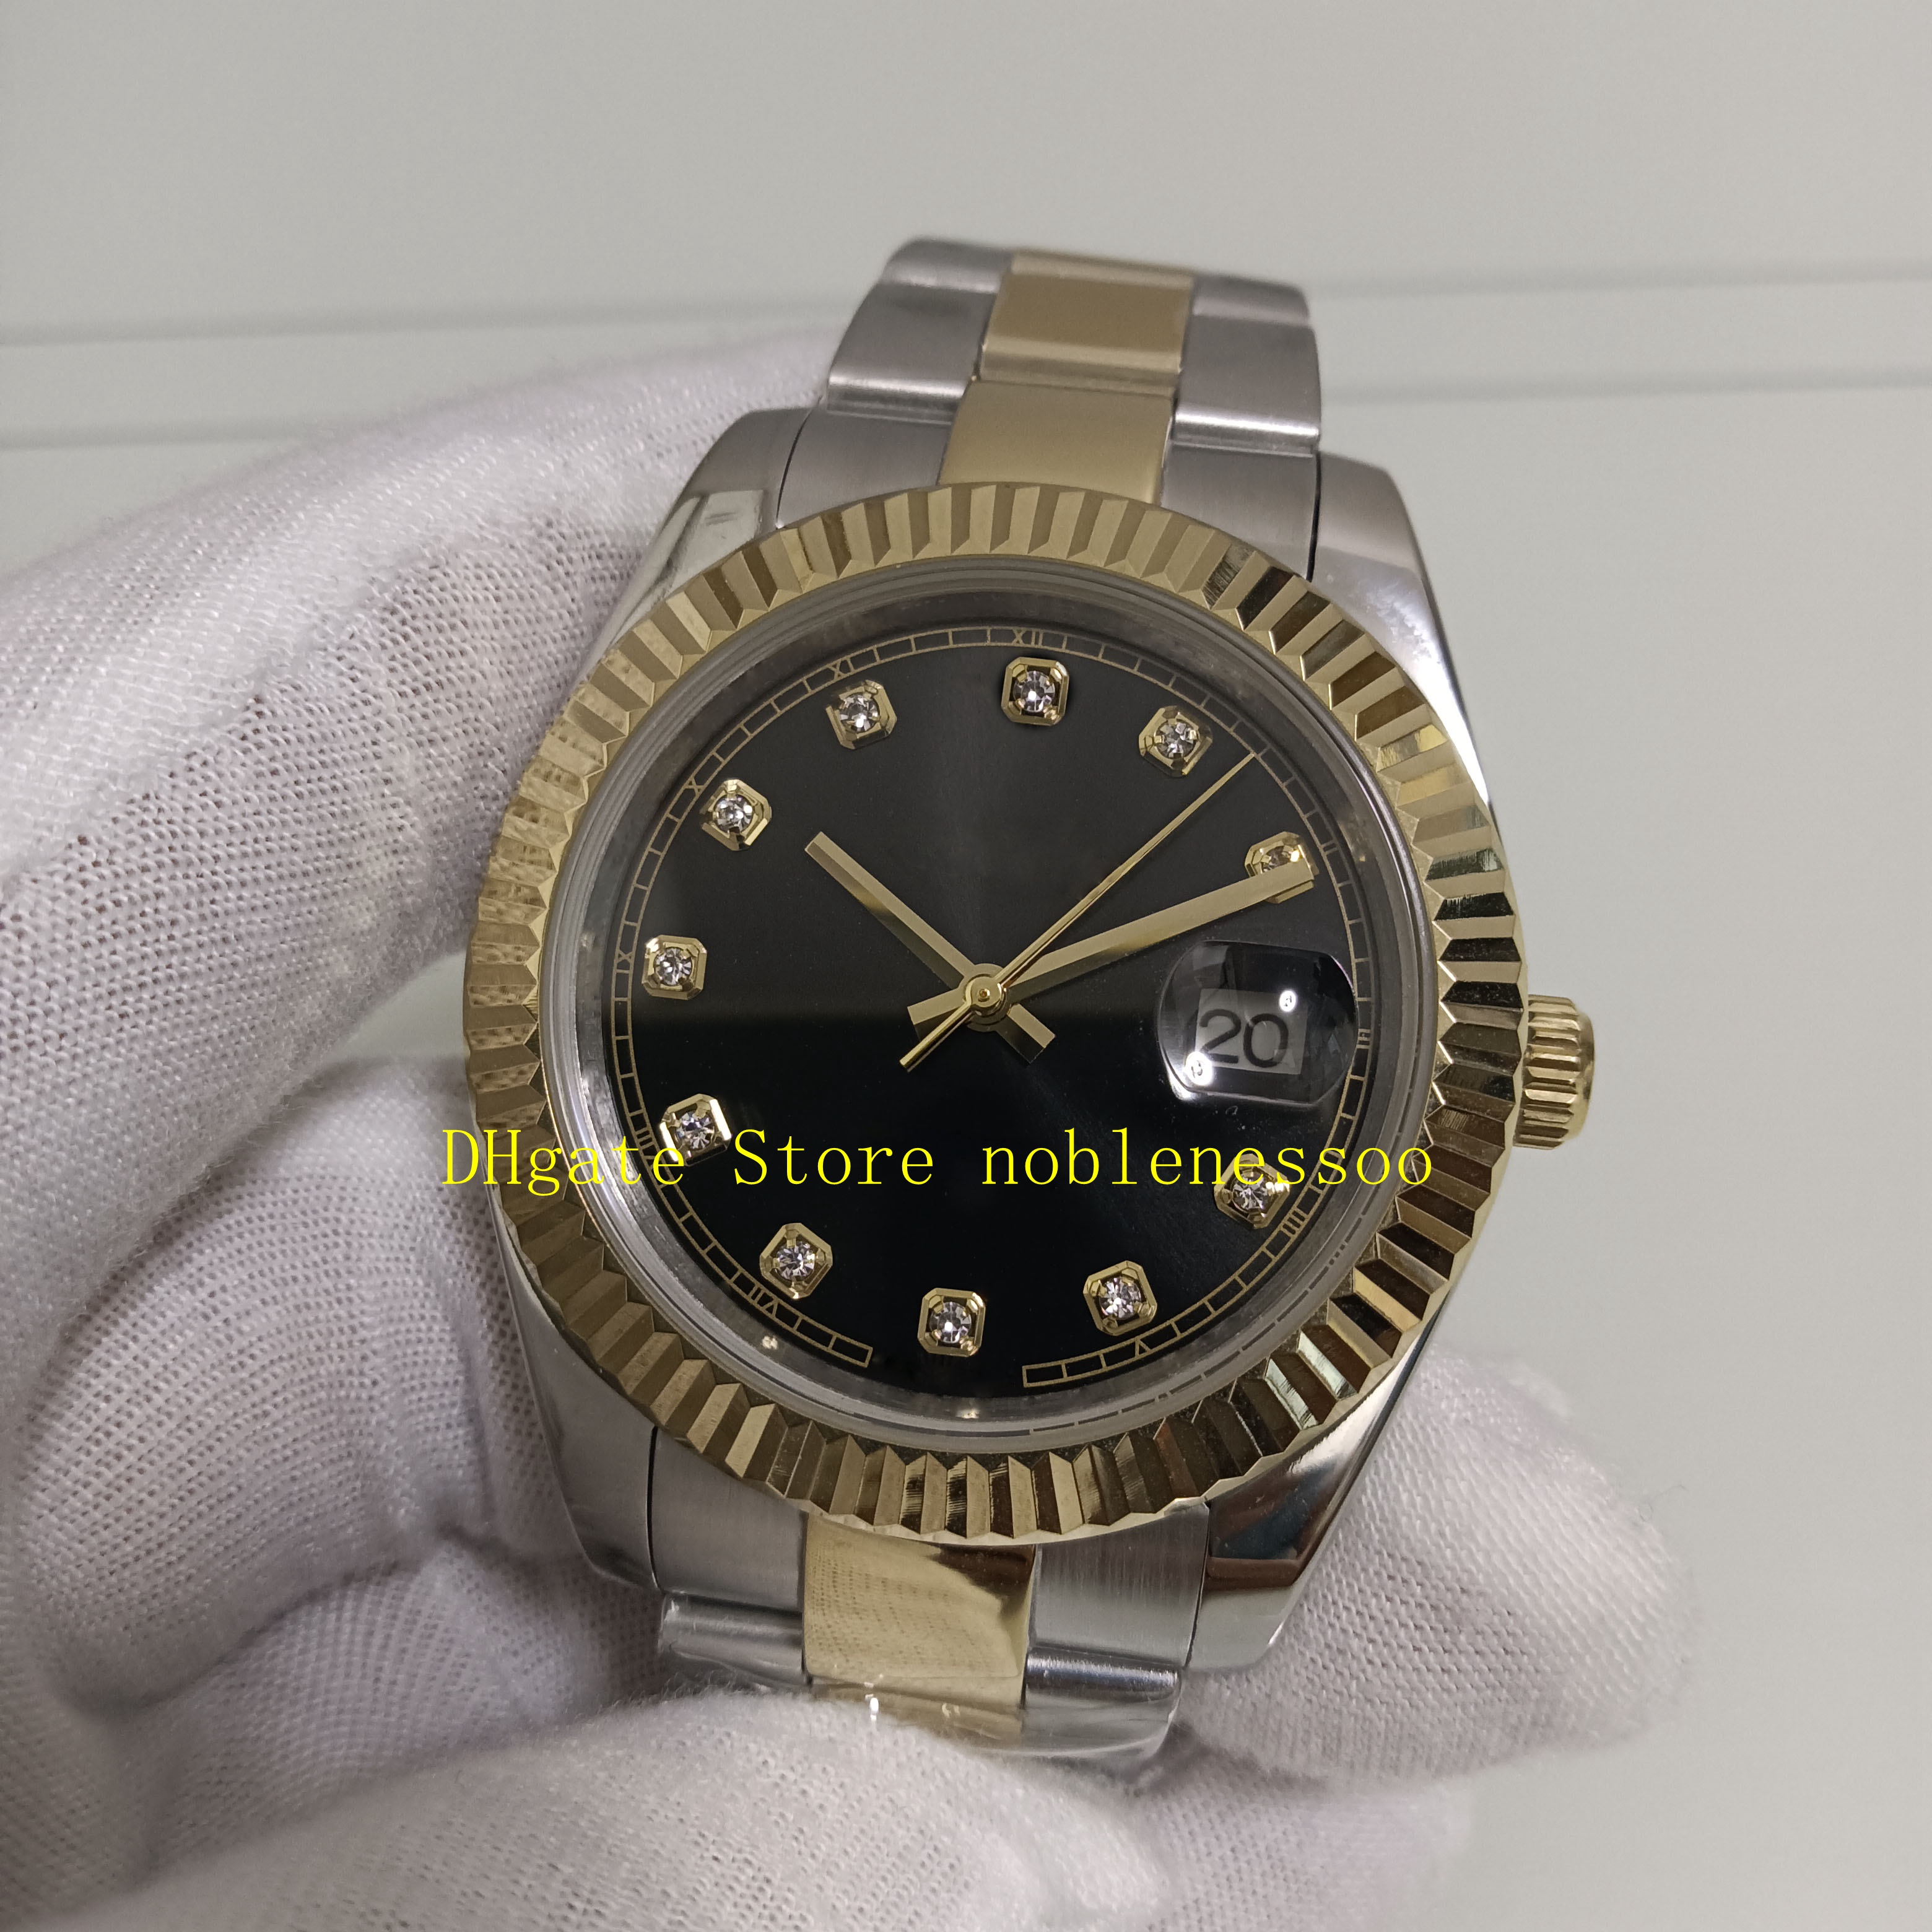 Real Po With Box Automatic Watches Men 41mm 18K Yellow Gold Black Diamond Dial Date Two Tone Bracelet Asia 2813 Movemen251o